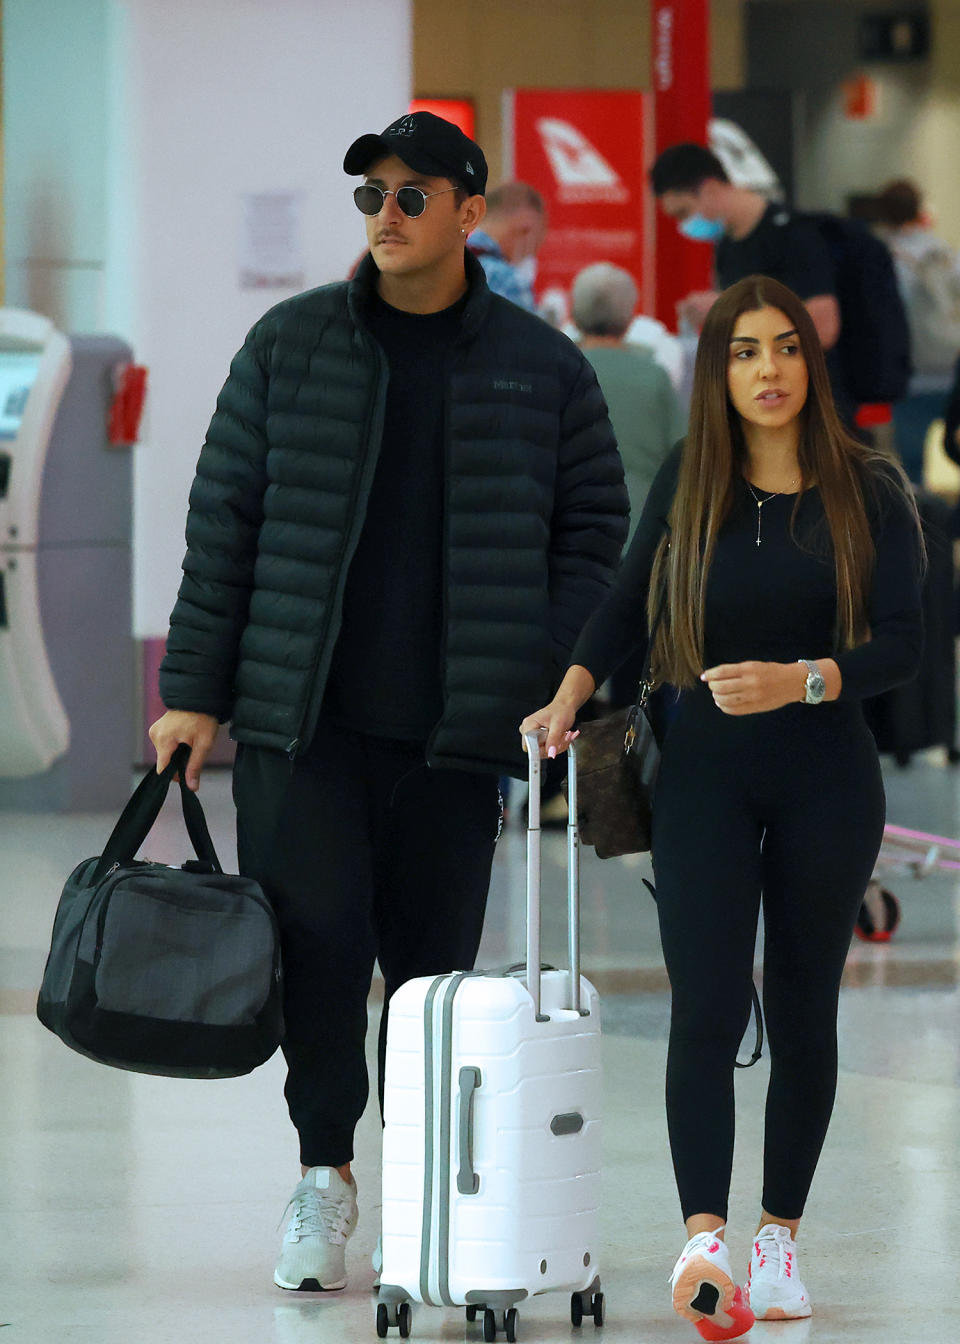 MAFS Daniel and Carolina walk through airport